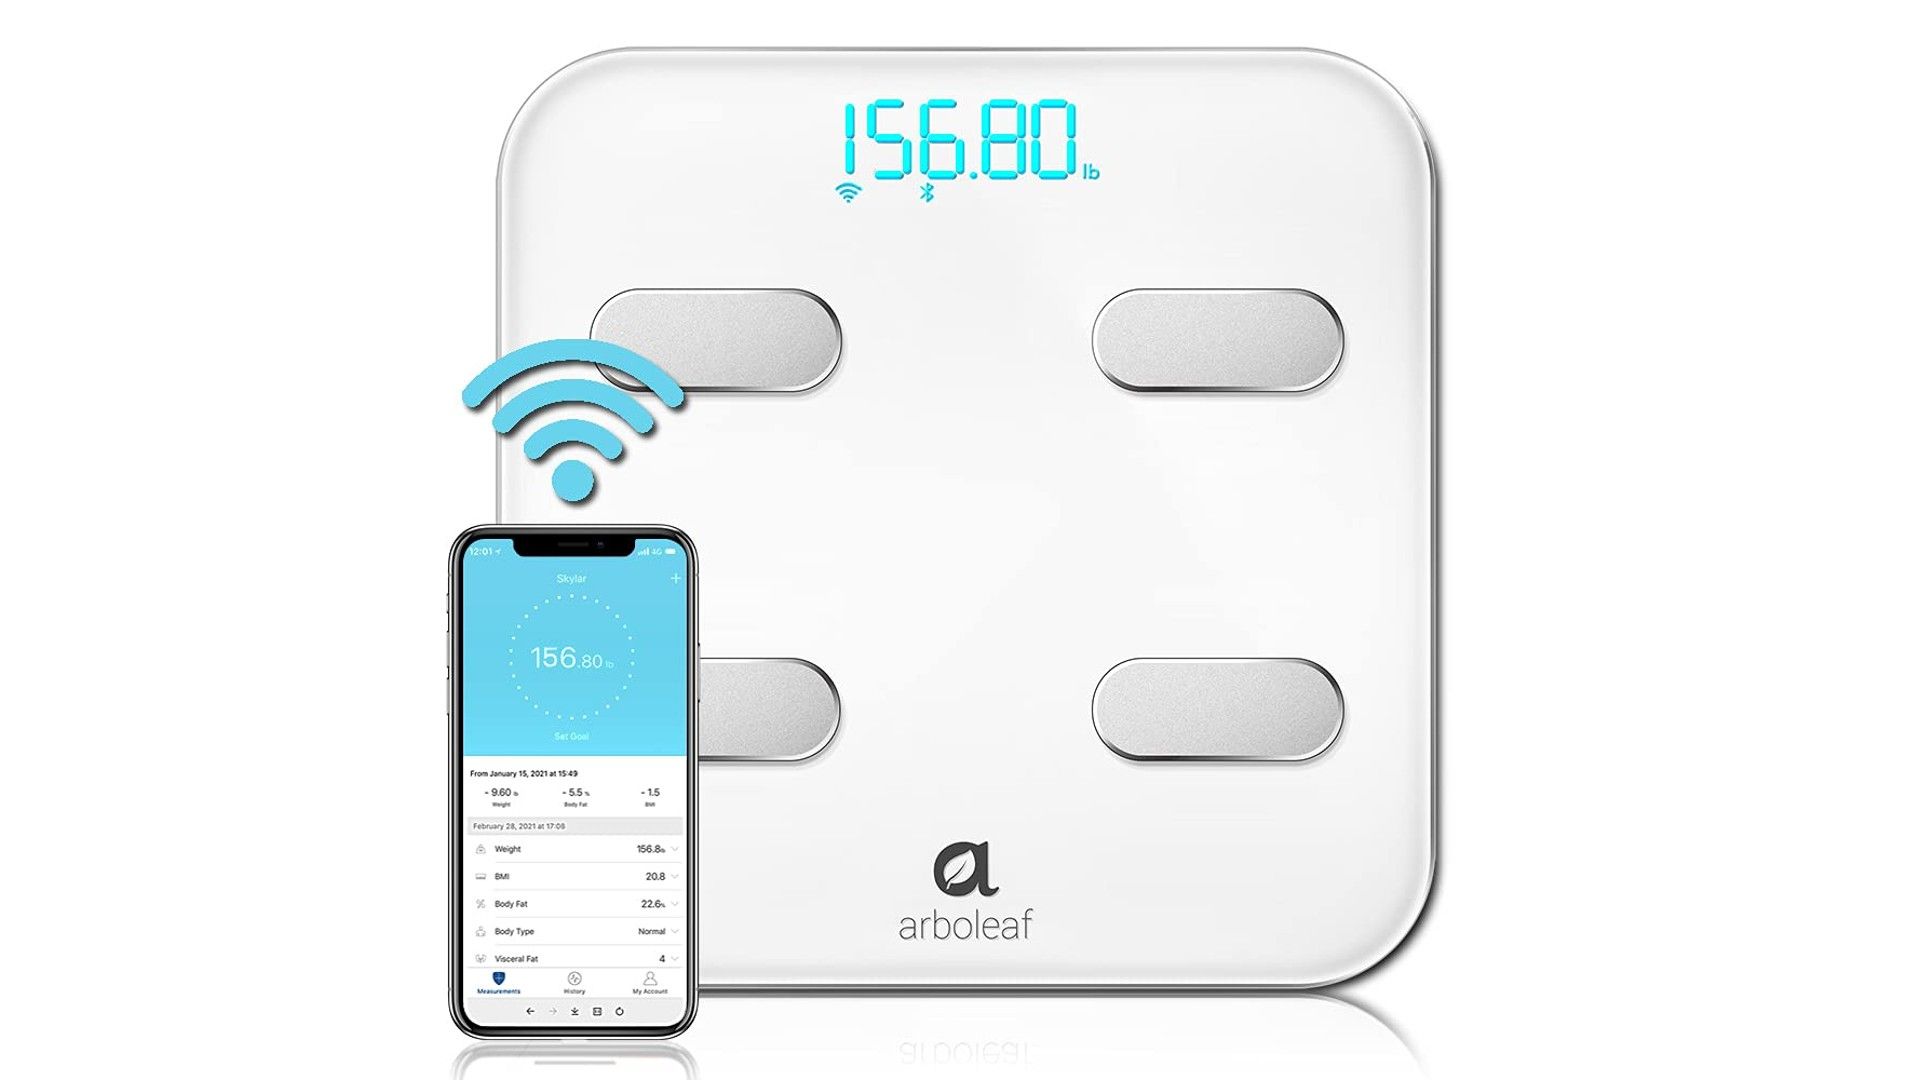 Arboleaf Digital Scale - Smart Scale Wireless Bathroom Weight Scale with iOS